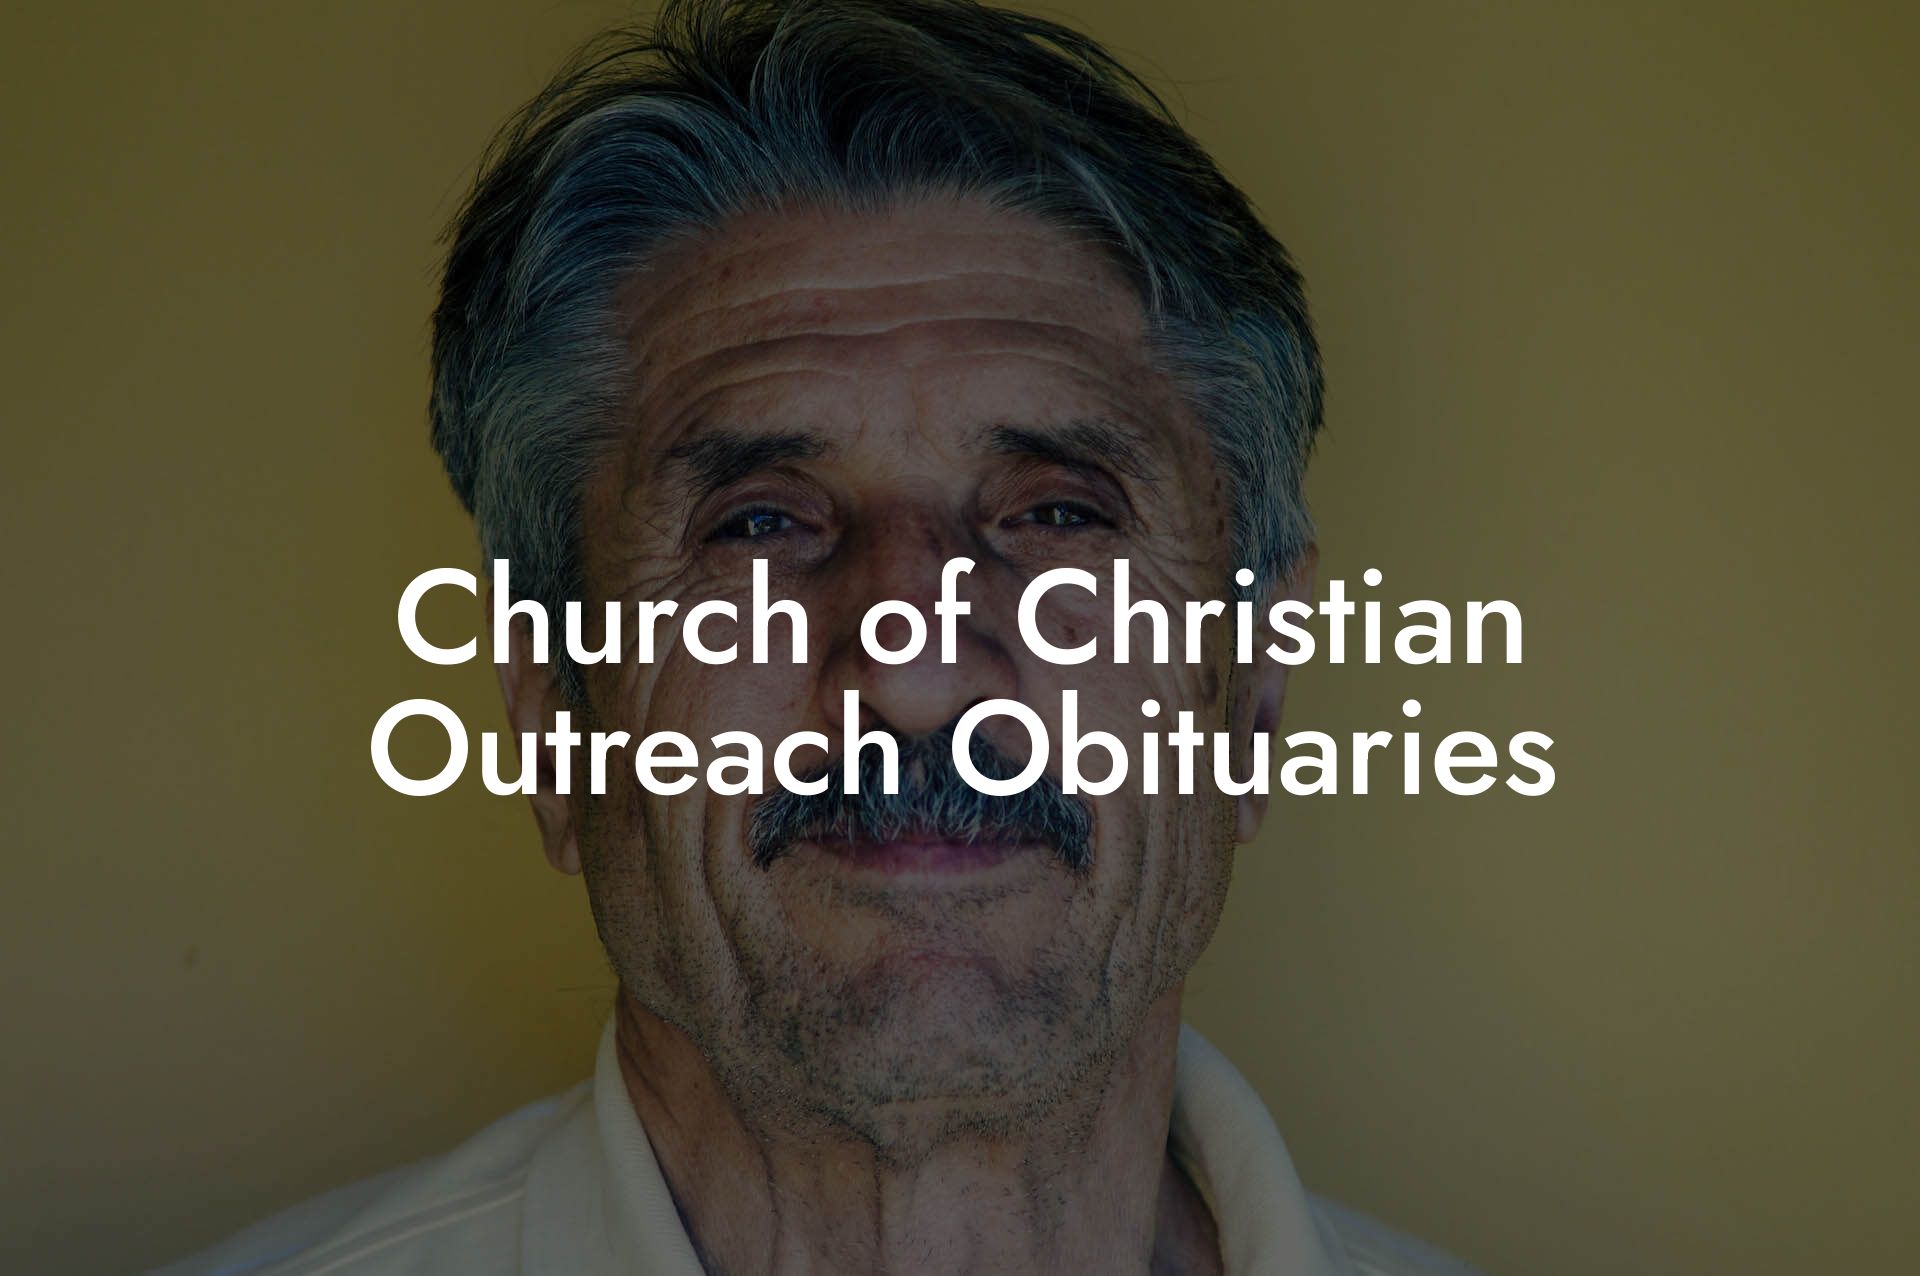 Church of Christian Outreach Obituaries